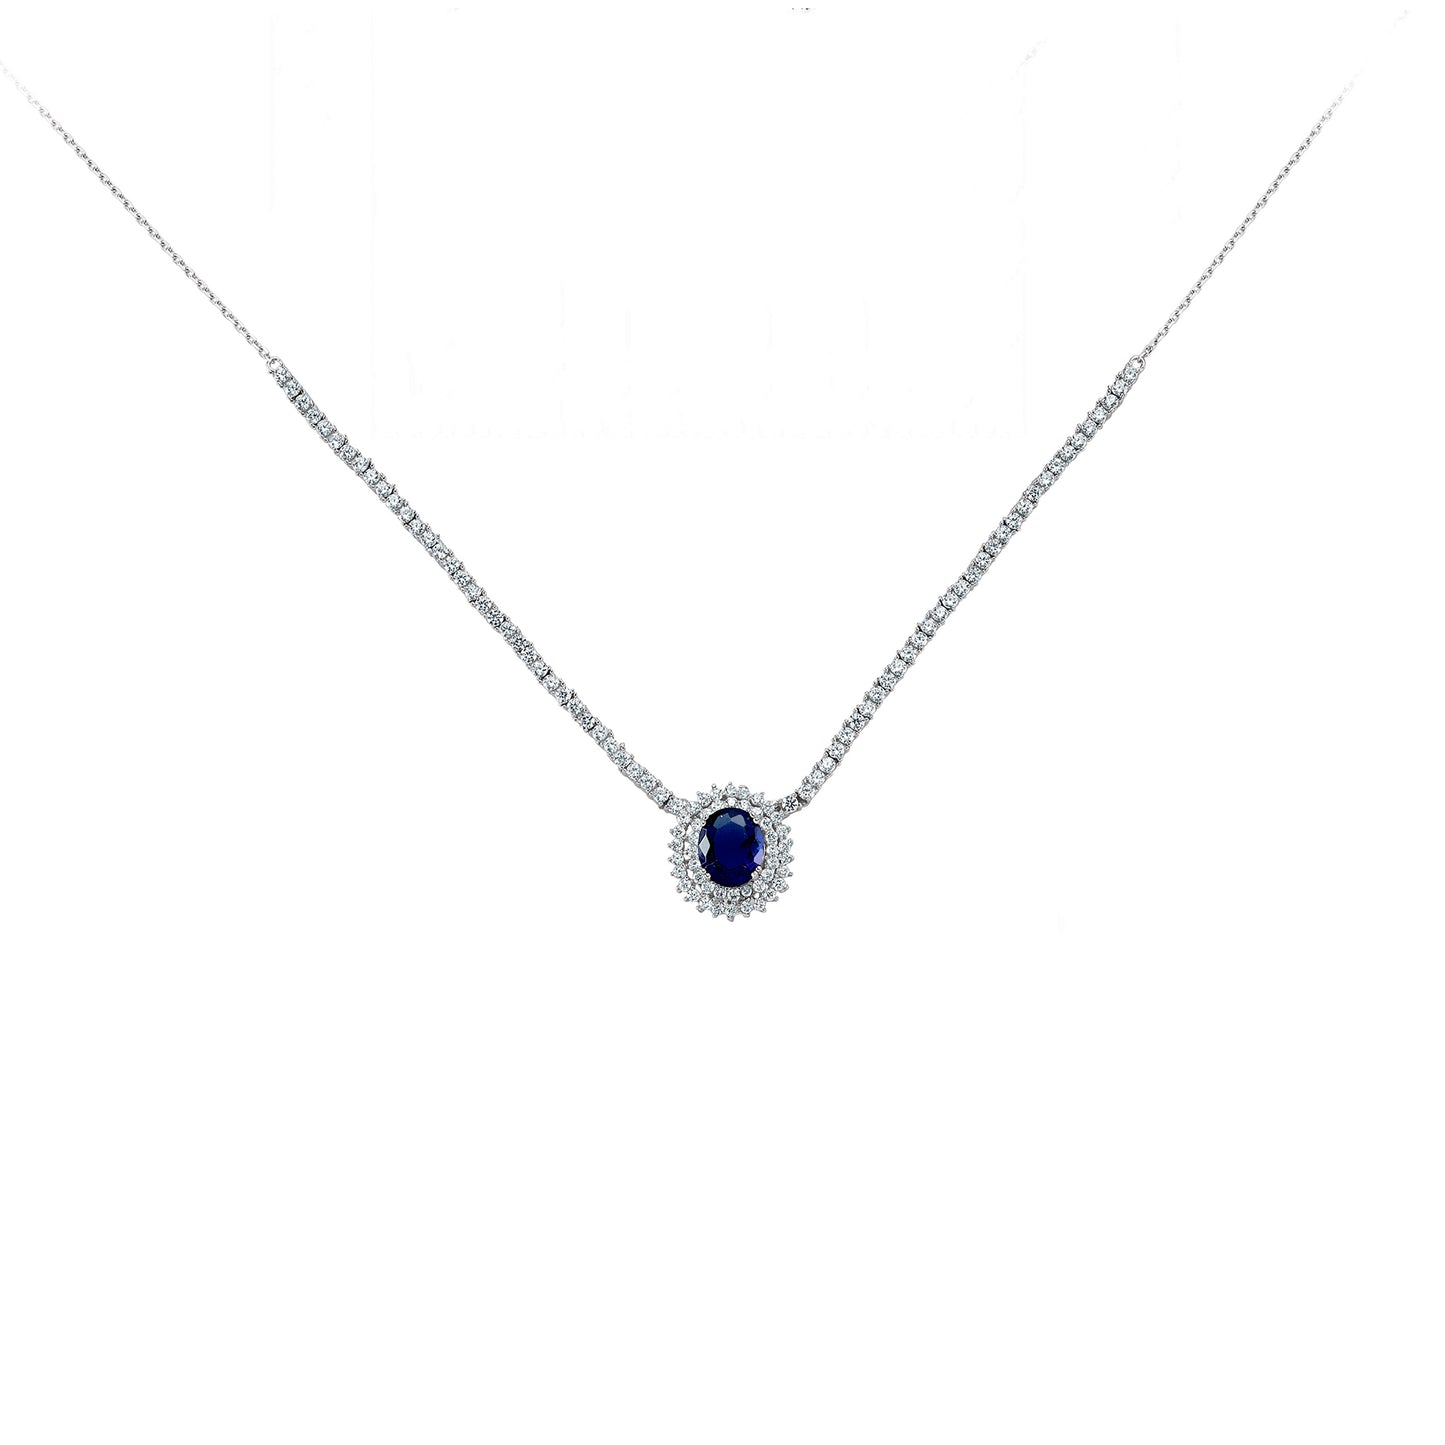 Silver  Blue Oval CZ Royal Lady Di Cluster Pendant Necklace 15inch - GVK099SAP